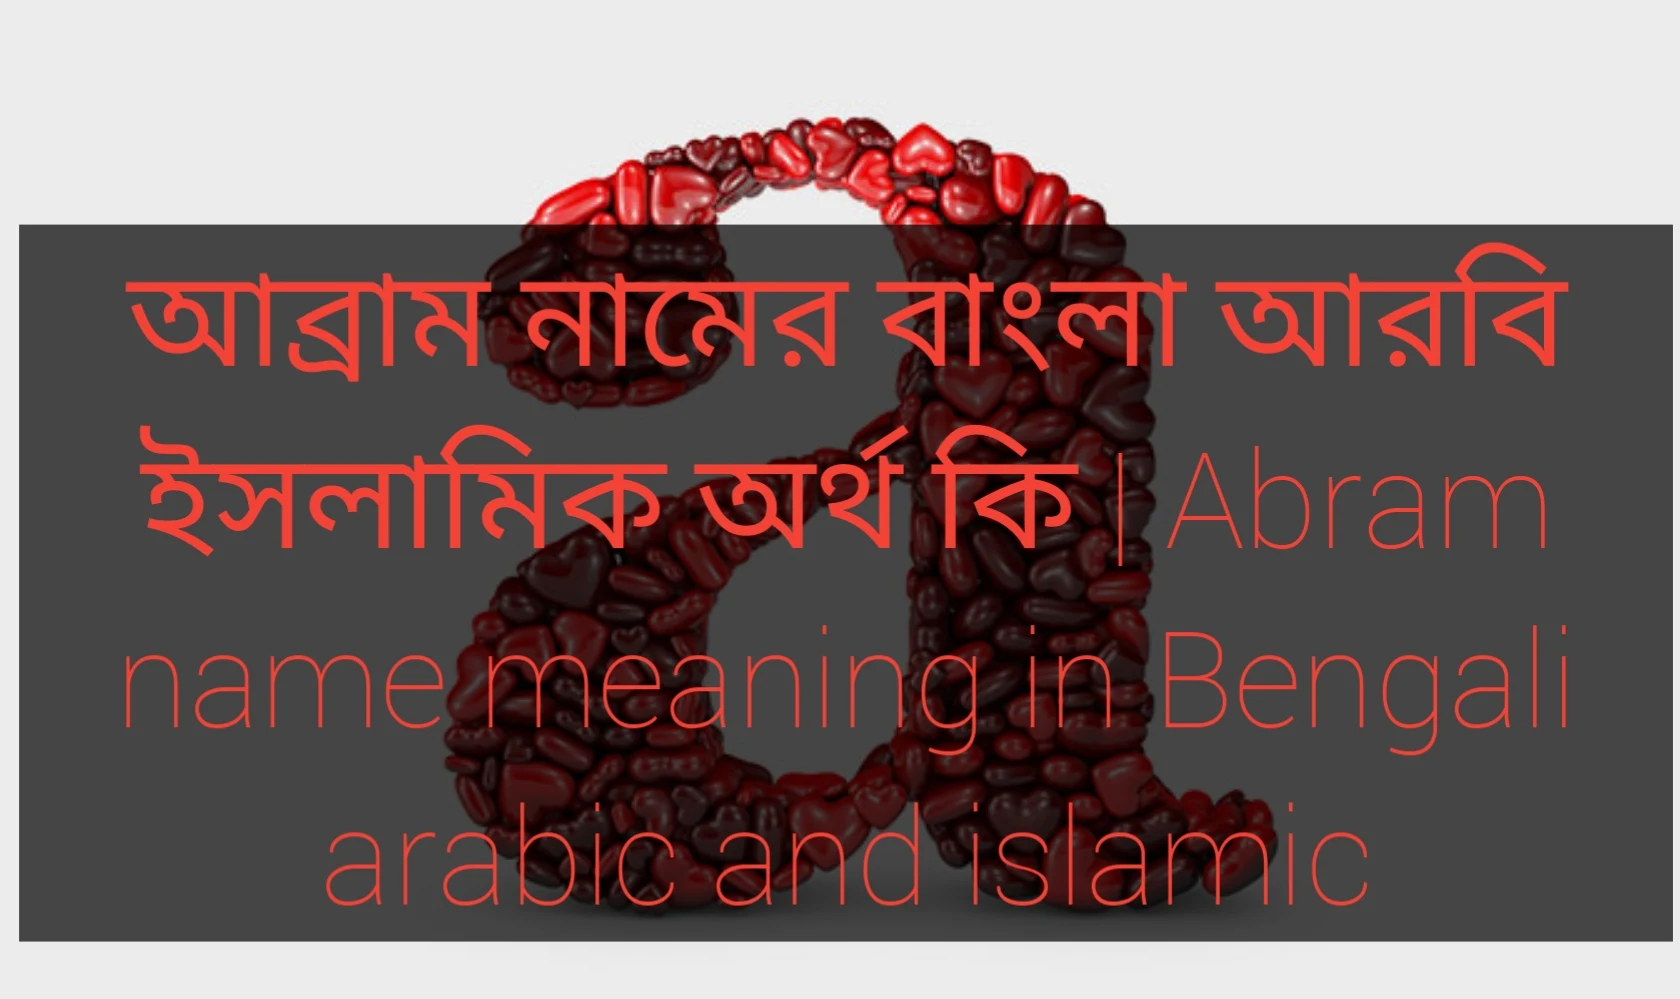 abram name meaning in Bengali, আব্রাম নামের অর্থ কি, আব্রাম নামের বাংলা অর্থ কি, আব্রাম নামের ইসলামিক অর্থ কি,